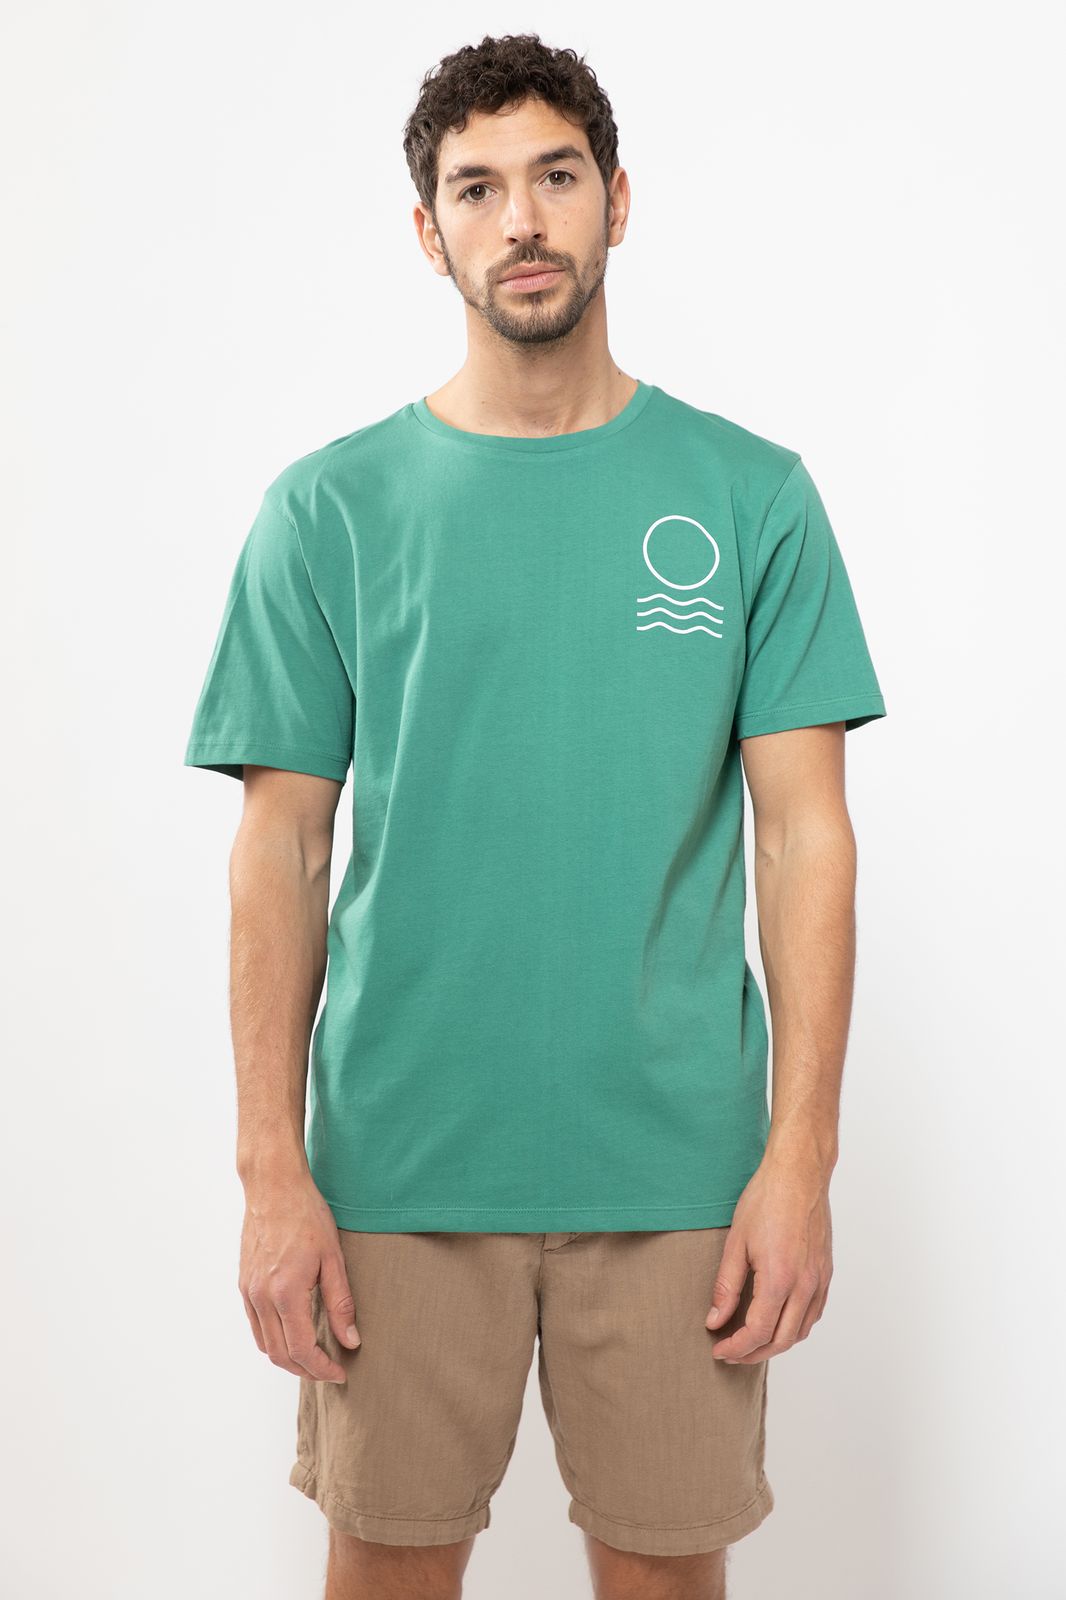 forum Kwelling bevestigen Groen T-shirt met print op rug - Heren | Sissy-Boy